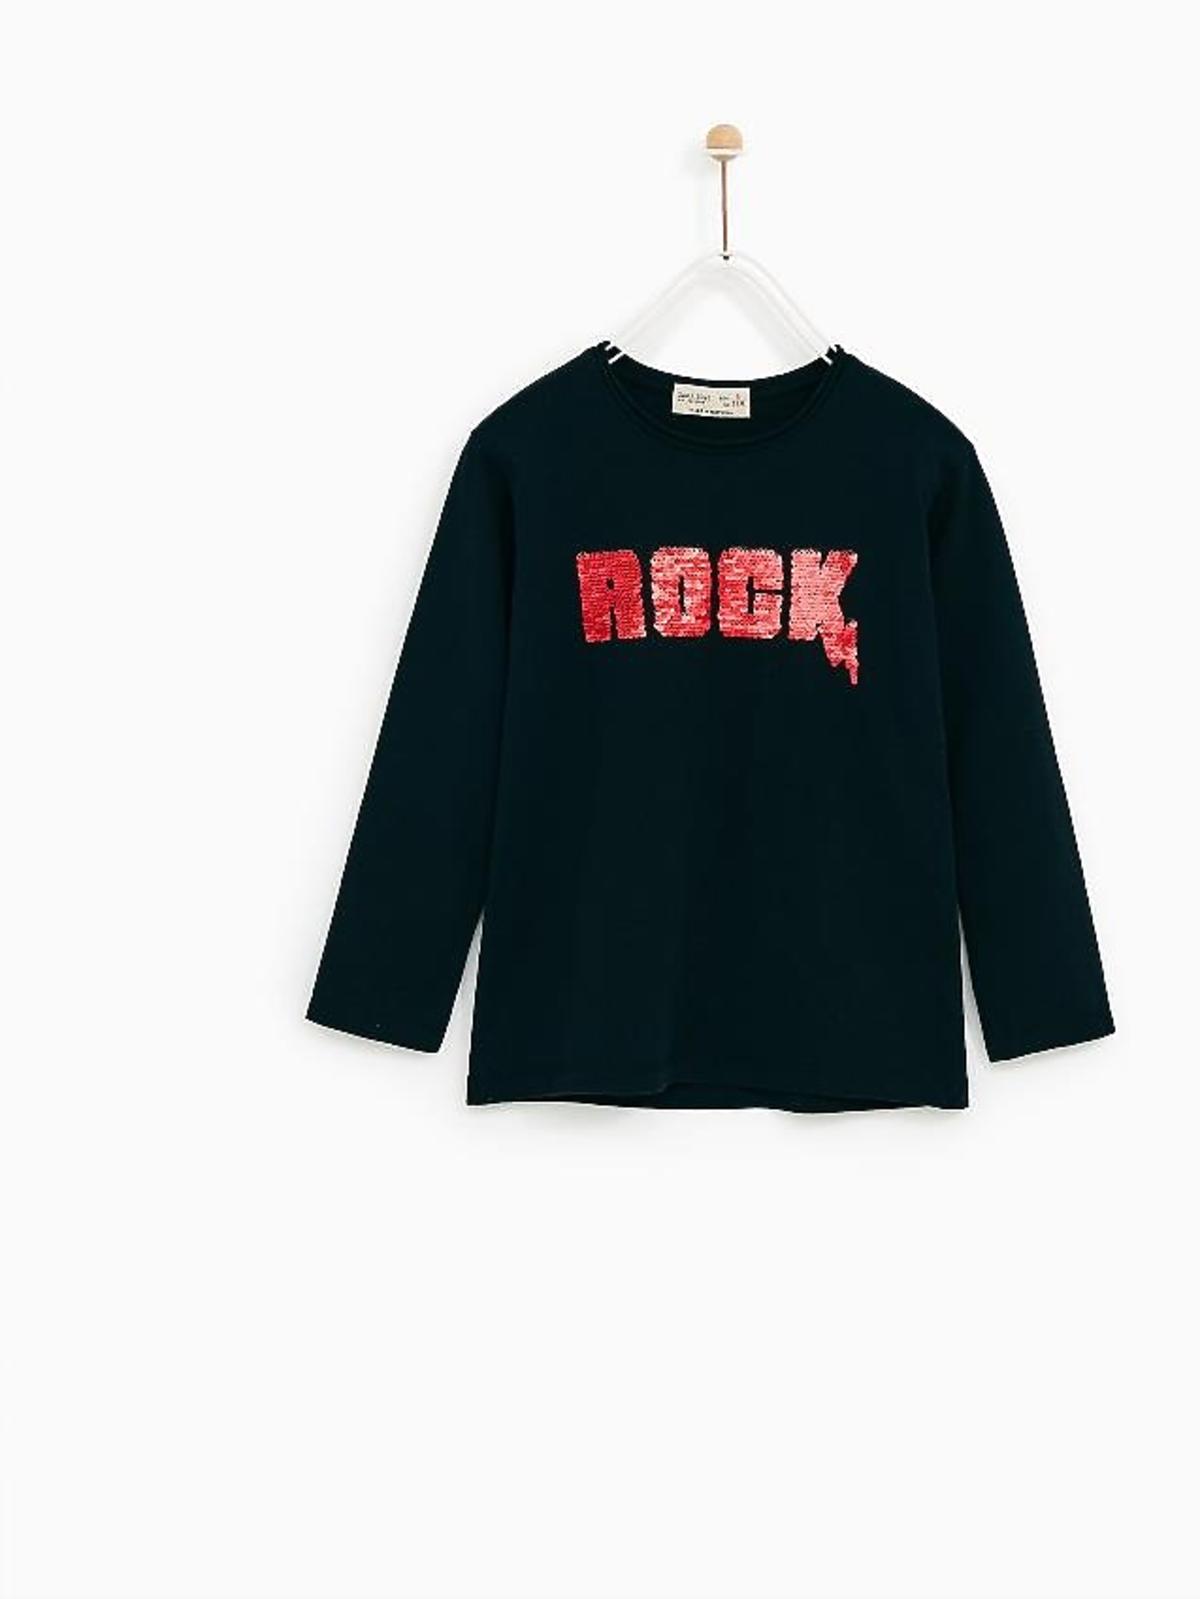 t-shirt z napisem Rock dwustronne cekiny Zara